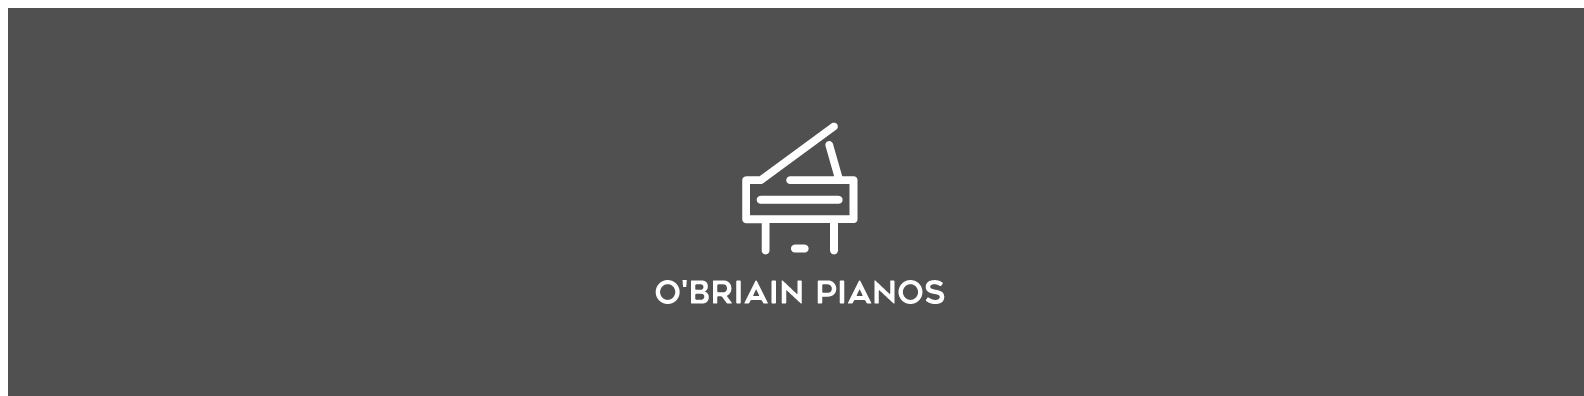 Bechstein Model 10-O'Briain Pianos